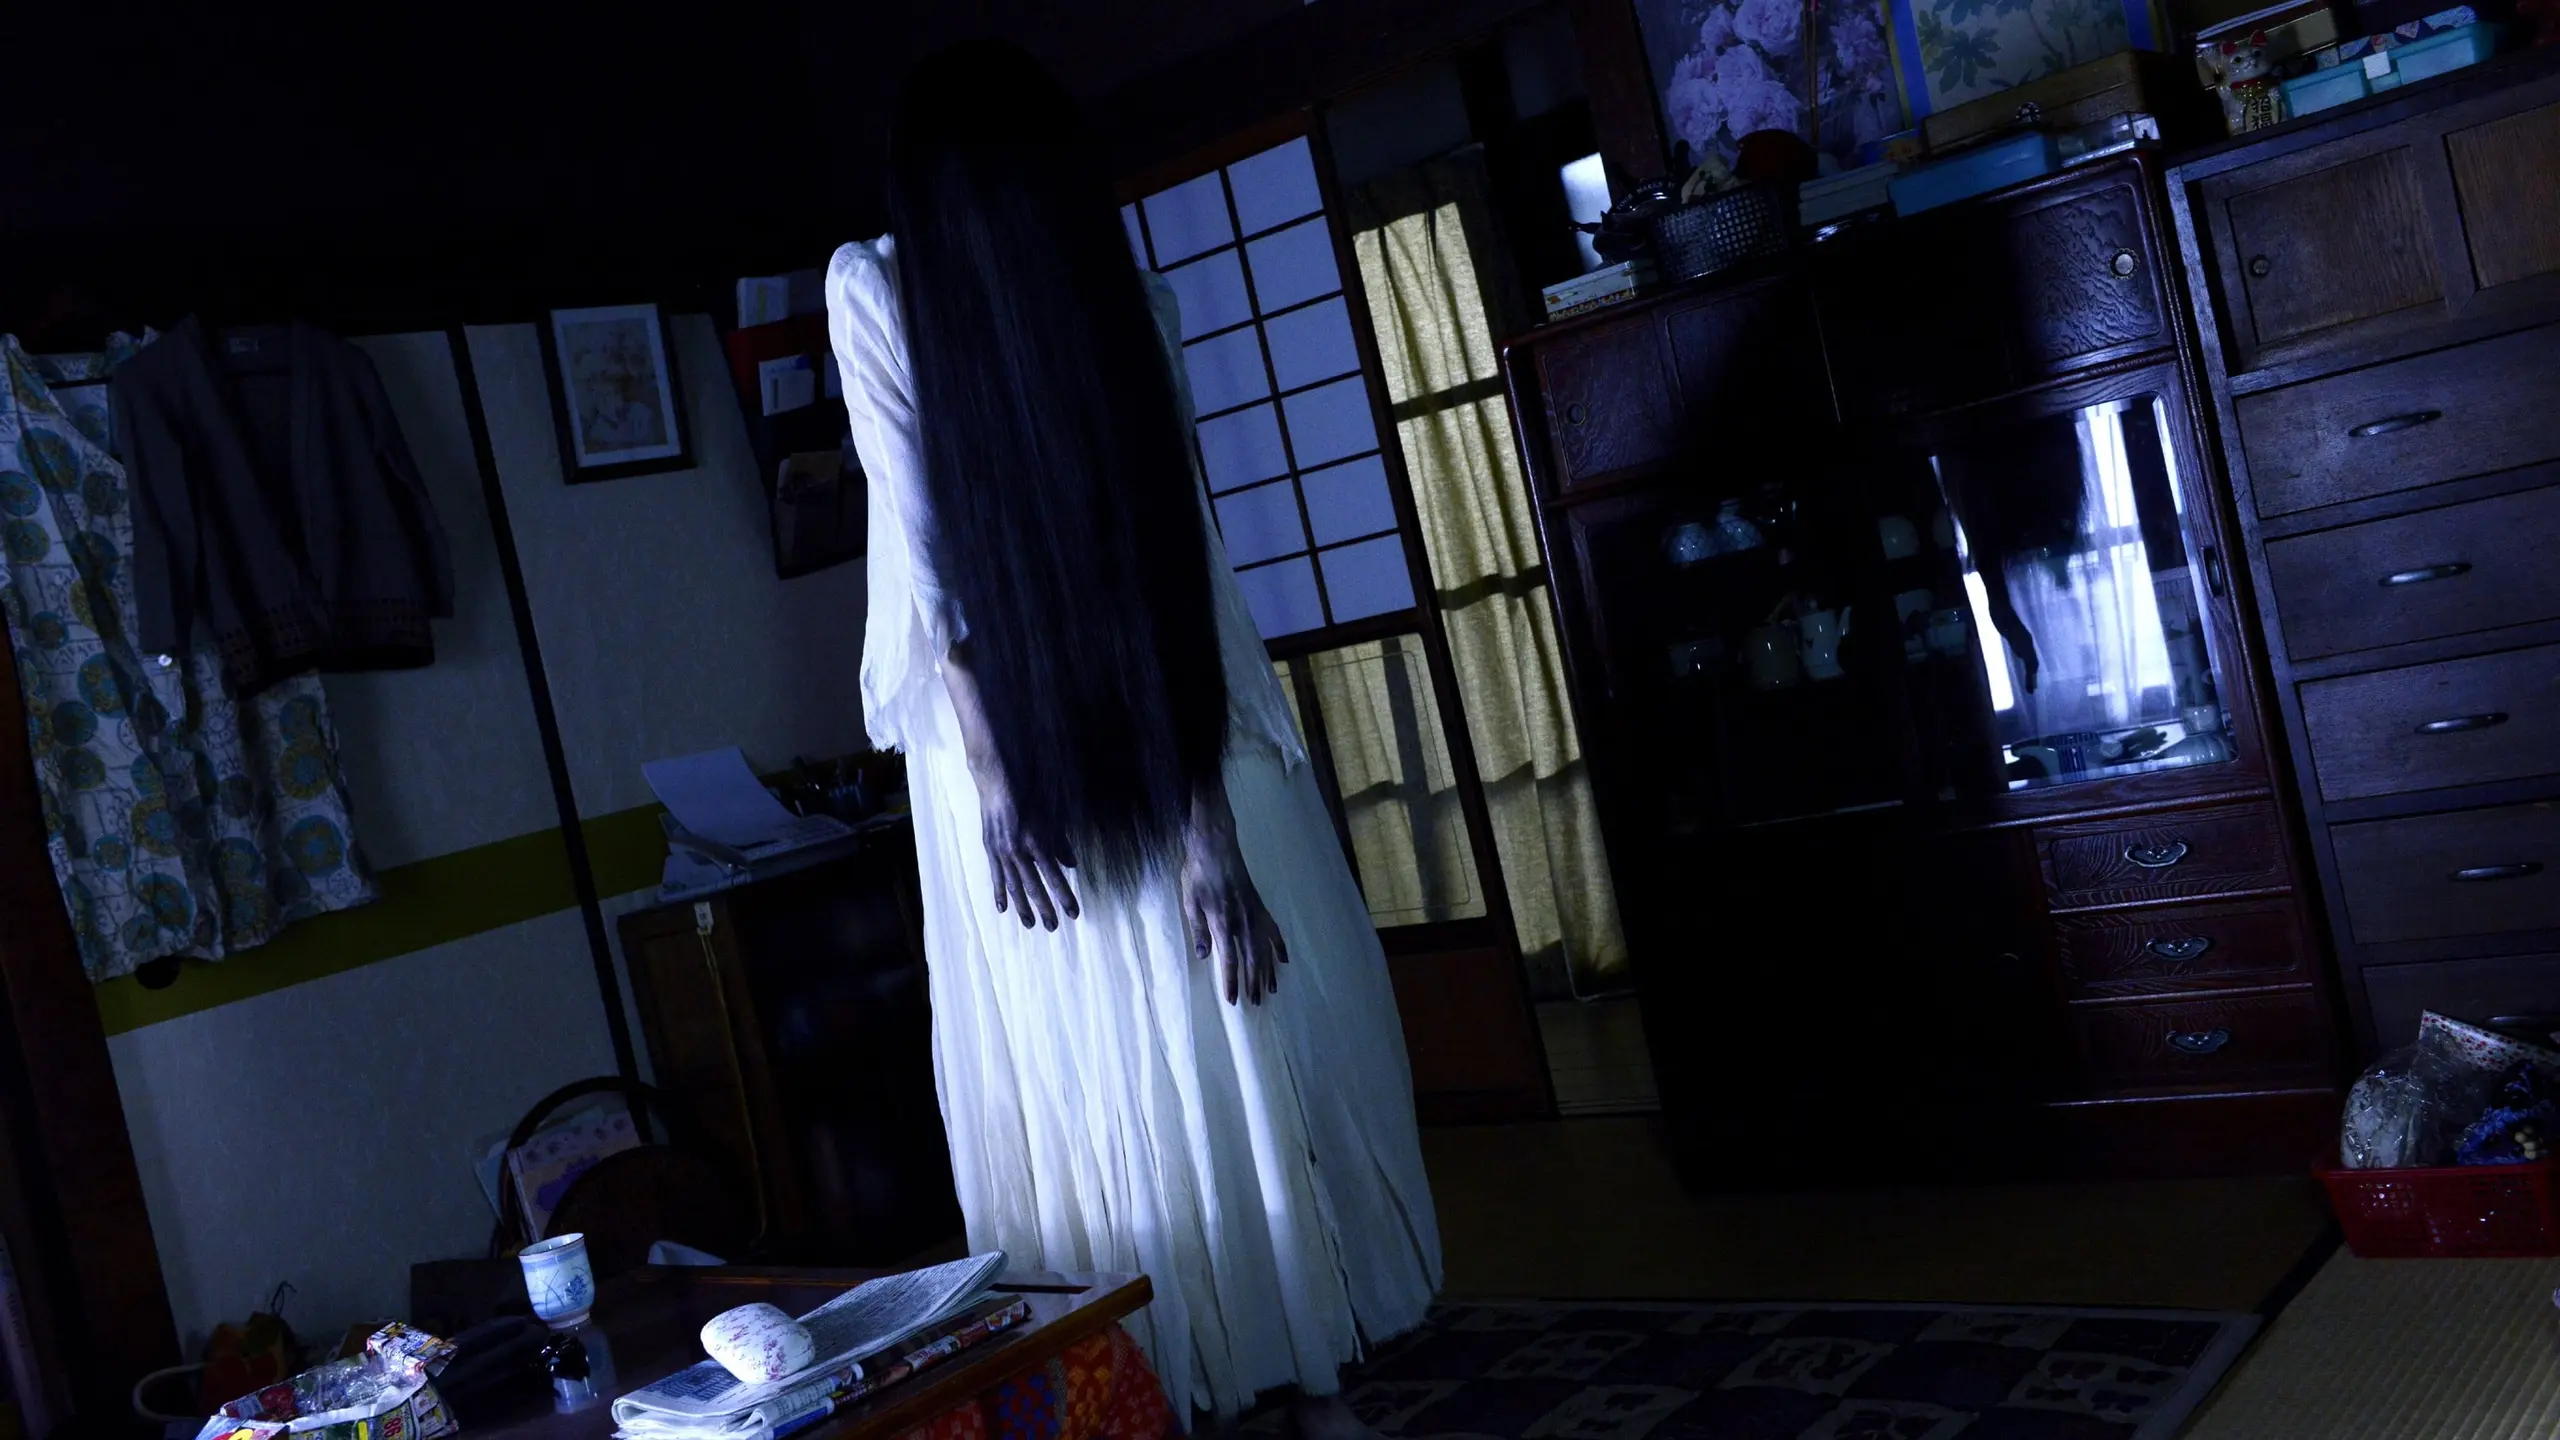 Sadako vs Kayako